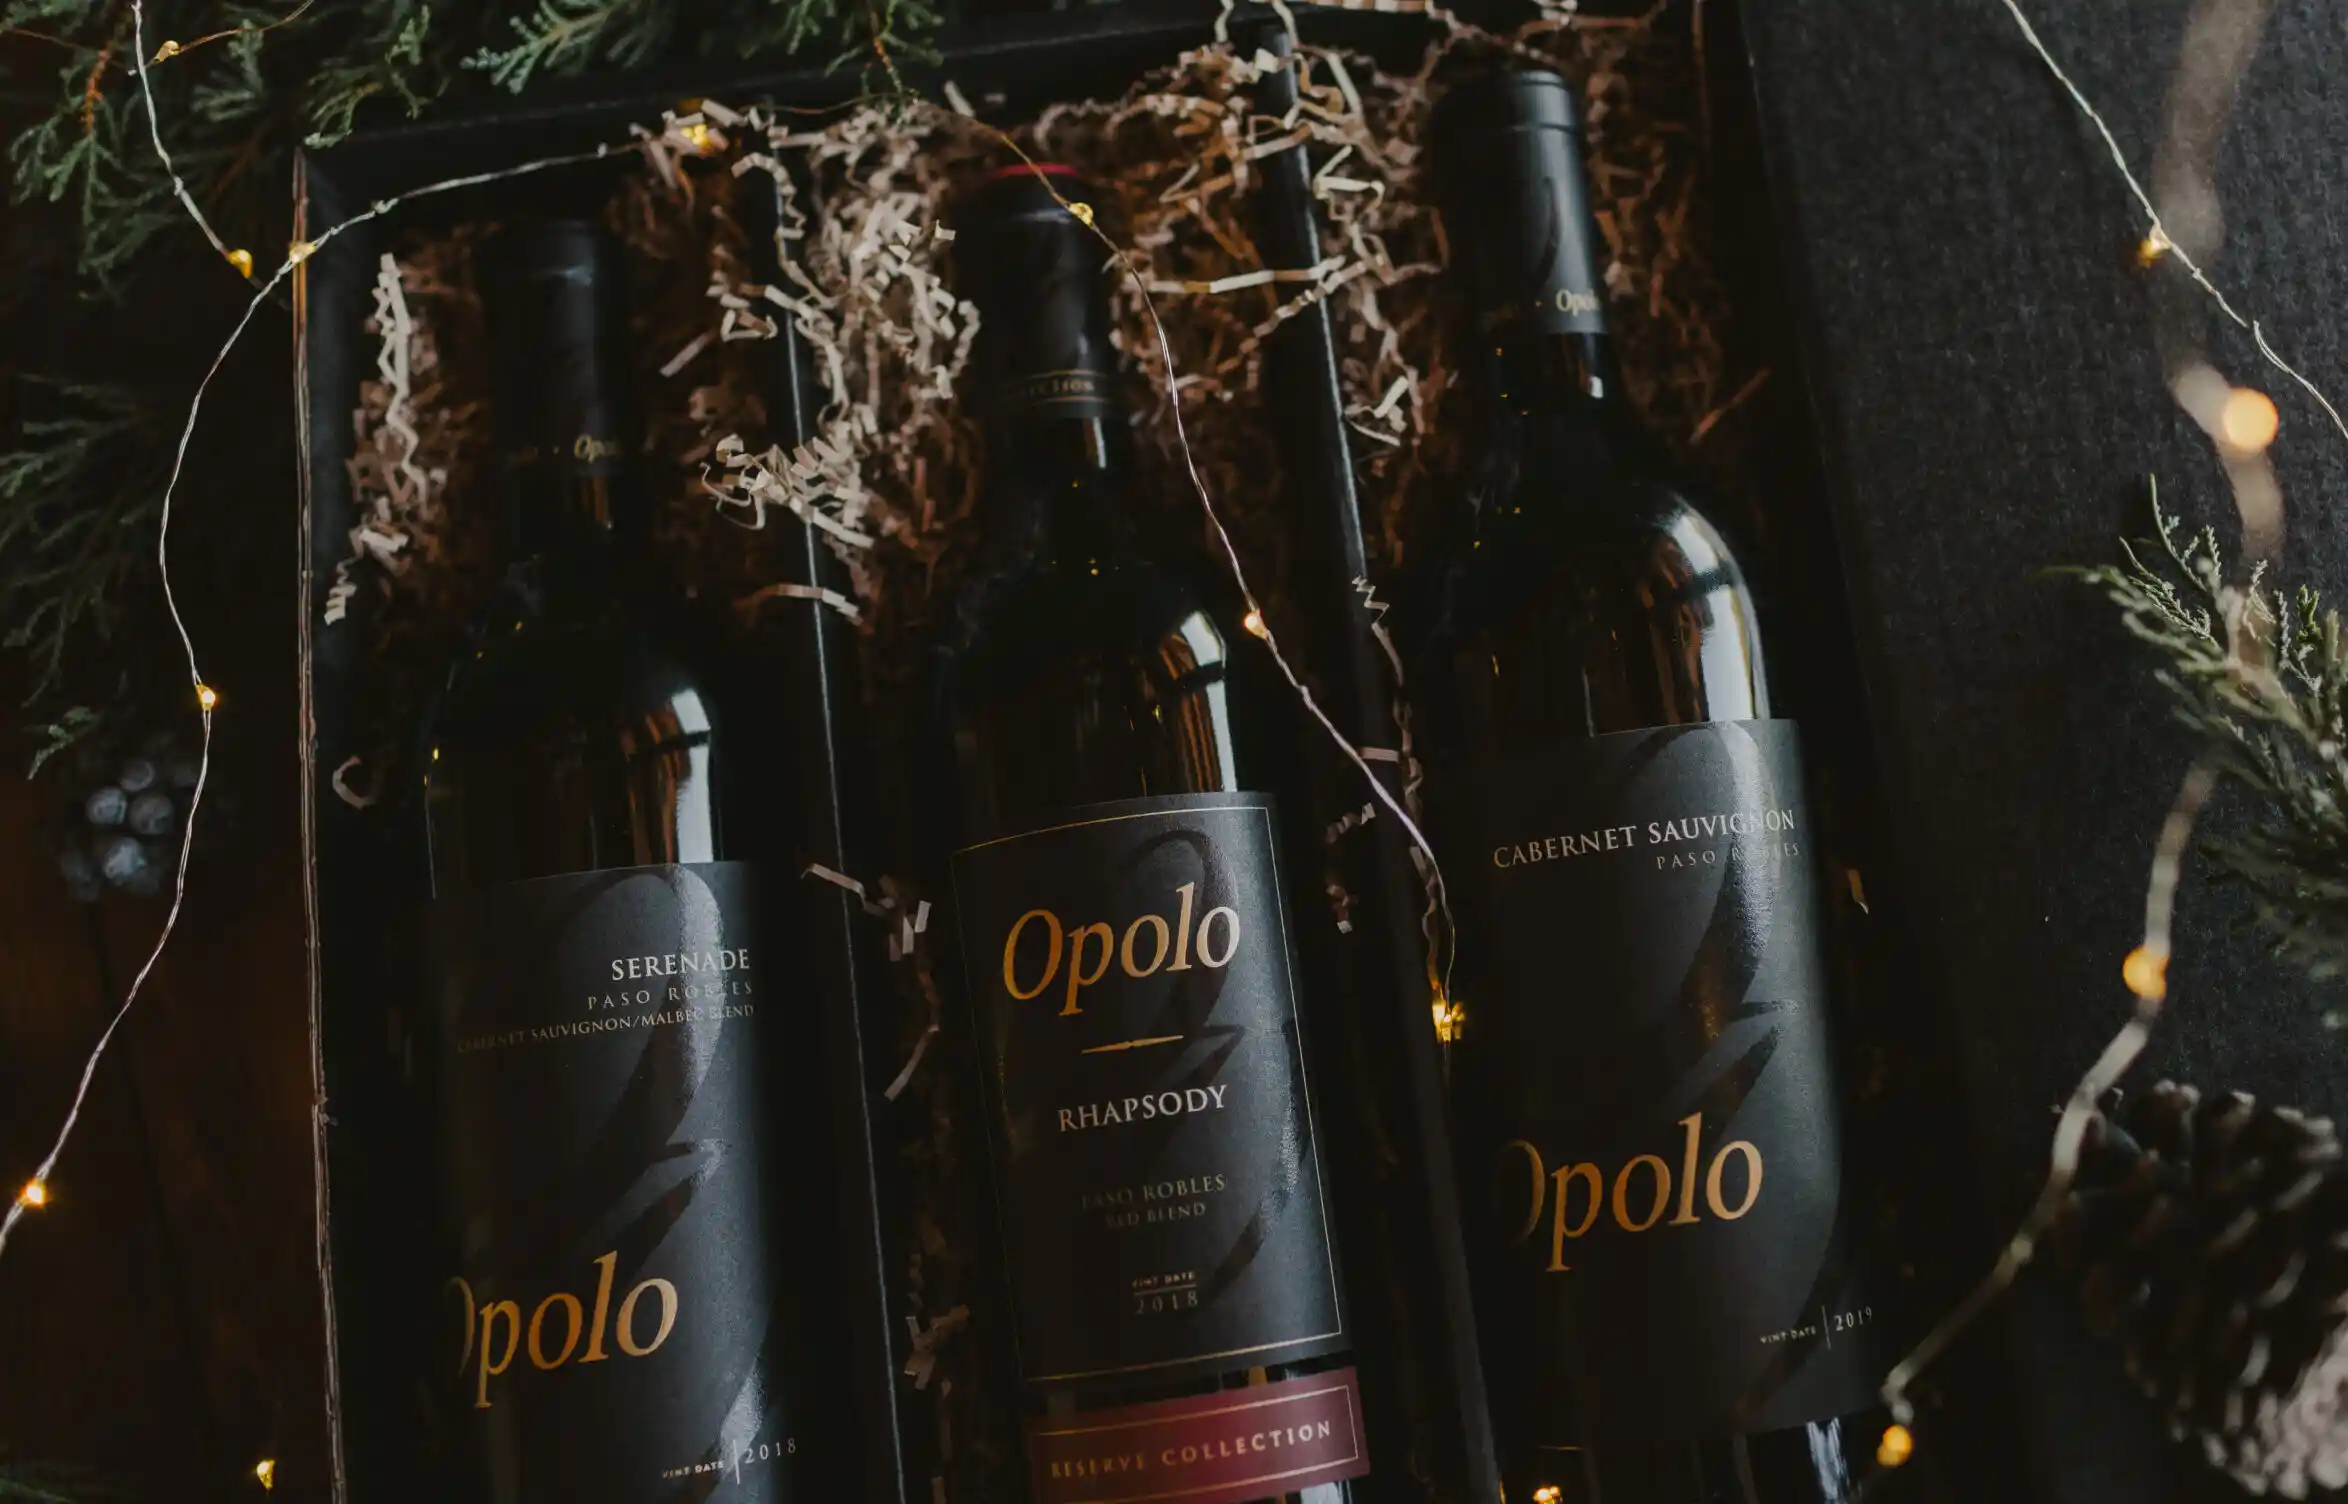 Holiday box set of Opolo wine